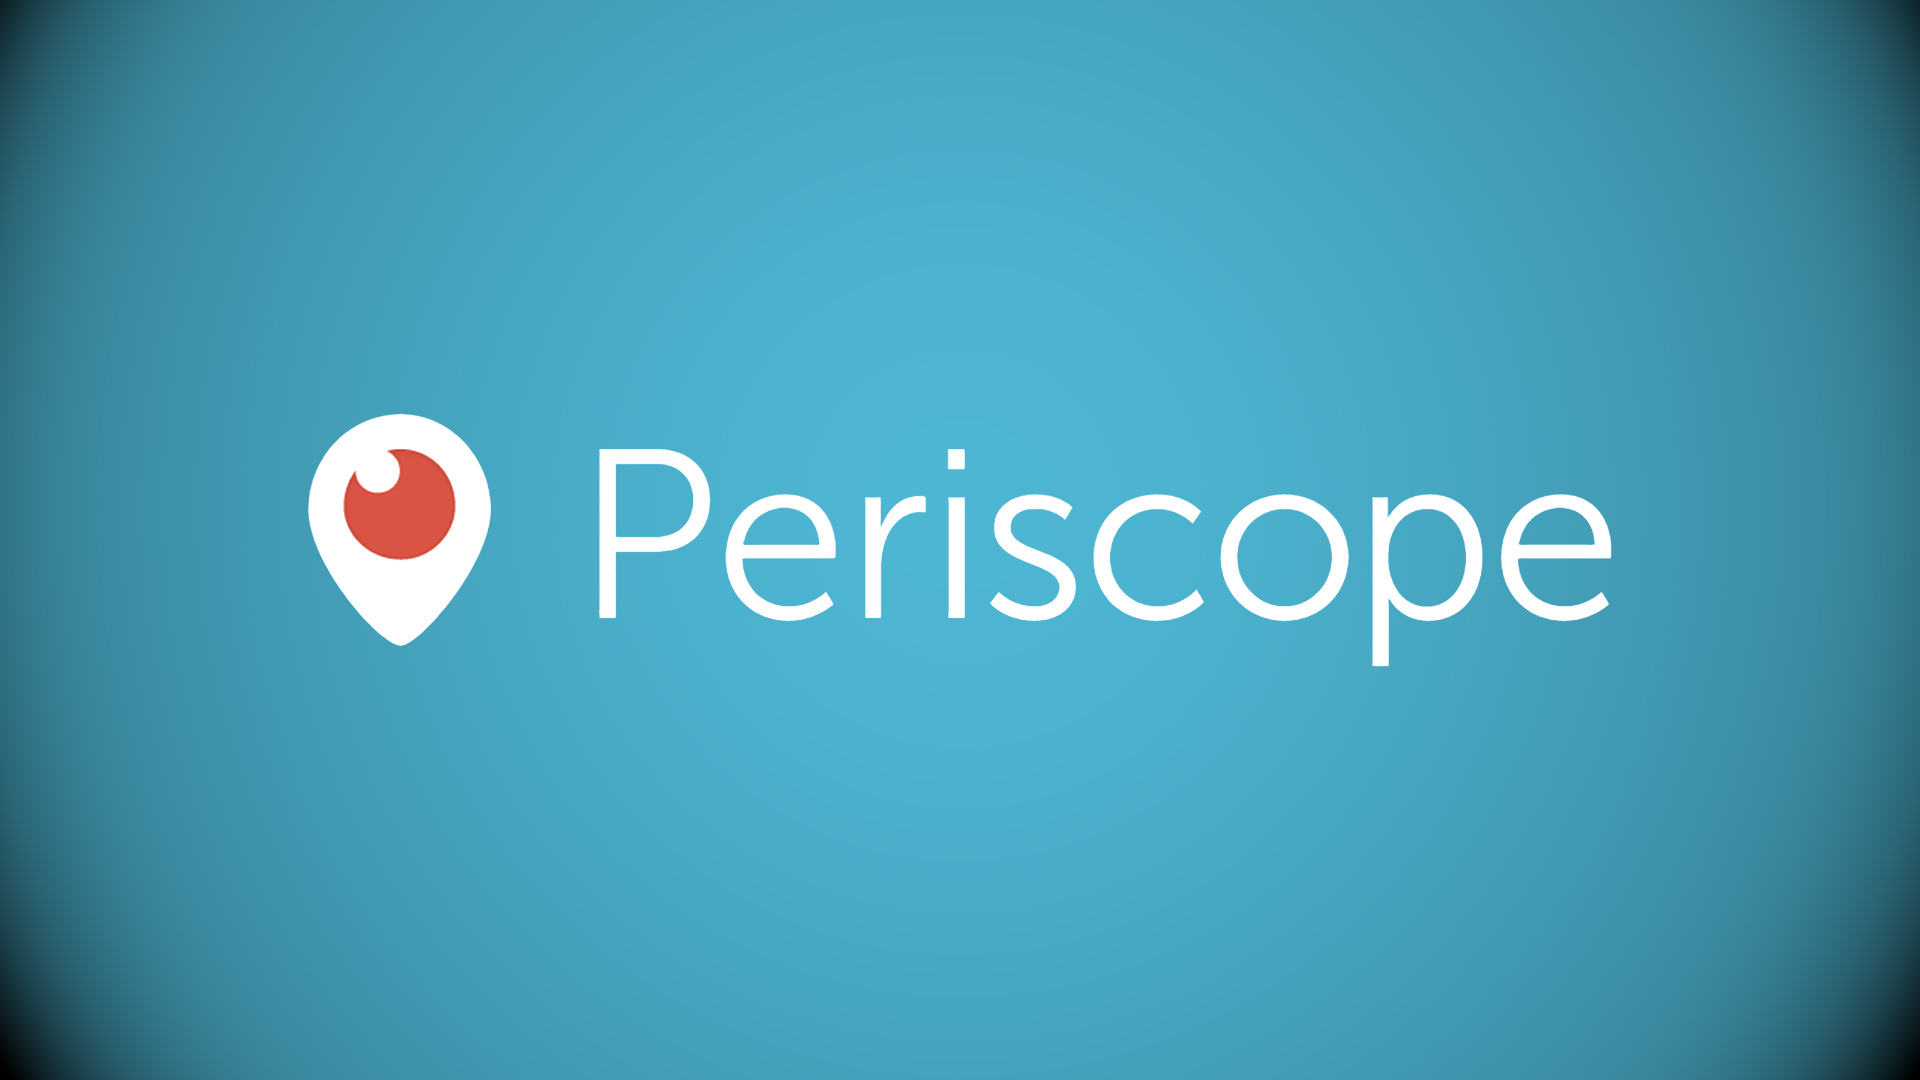 https://www.dotmug.net/wp-content/uploads/2015/04/periscope-logo-1920.jpg